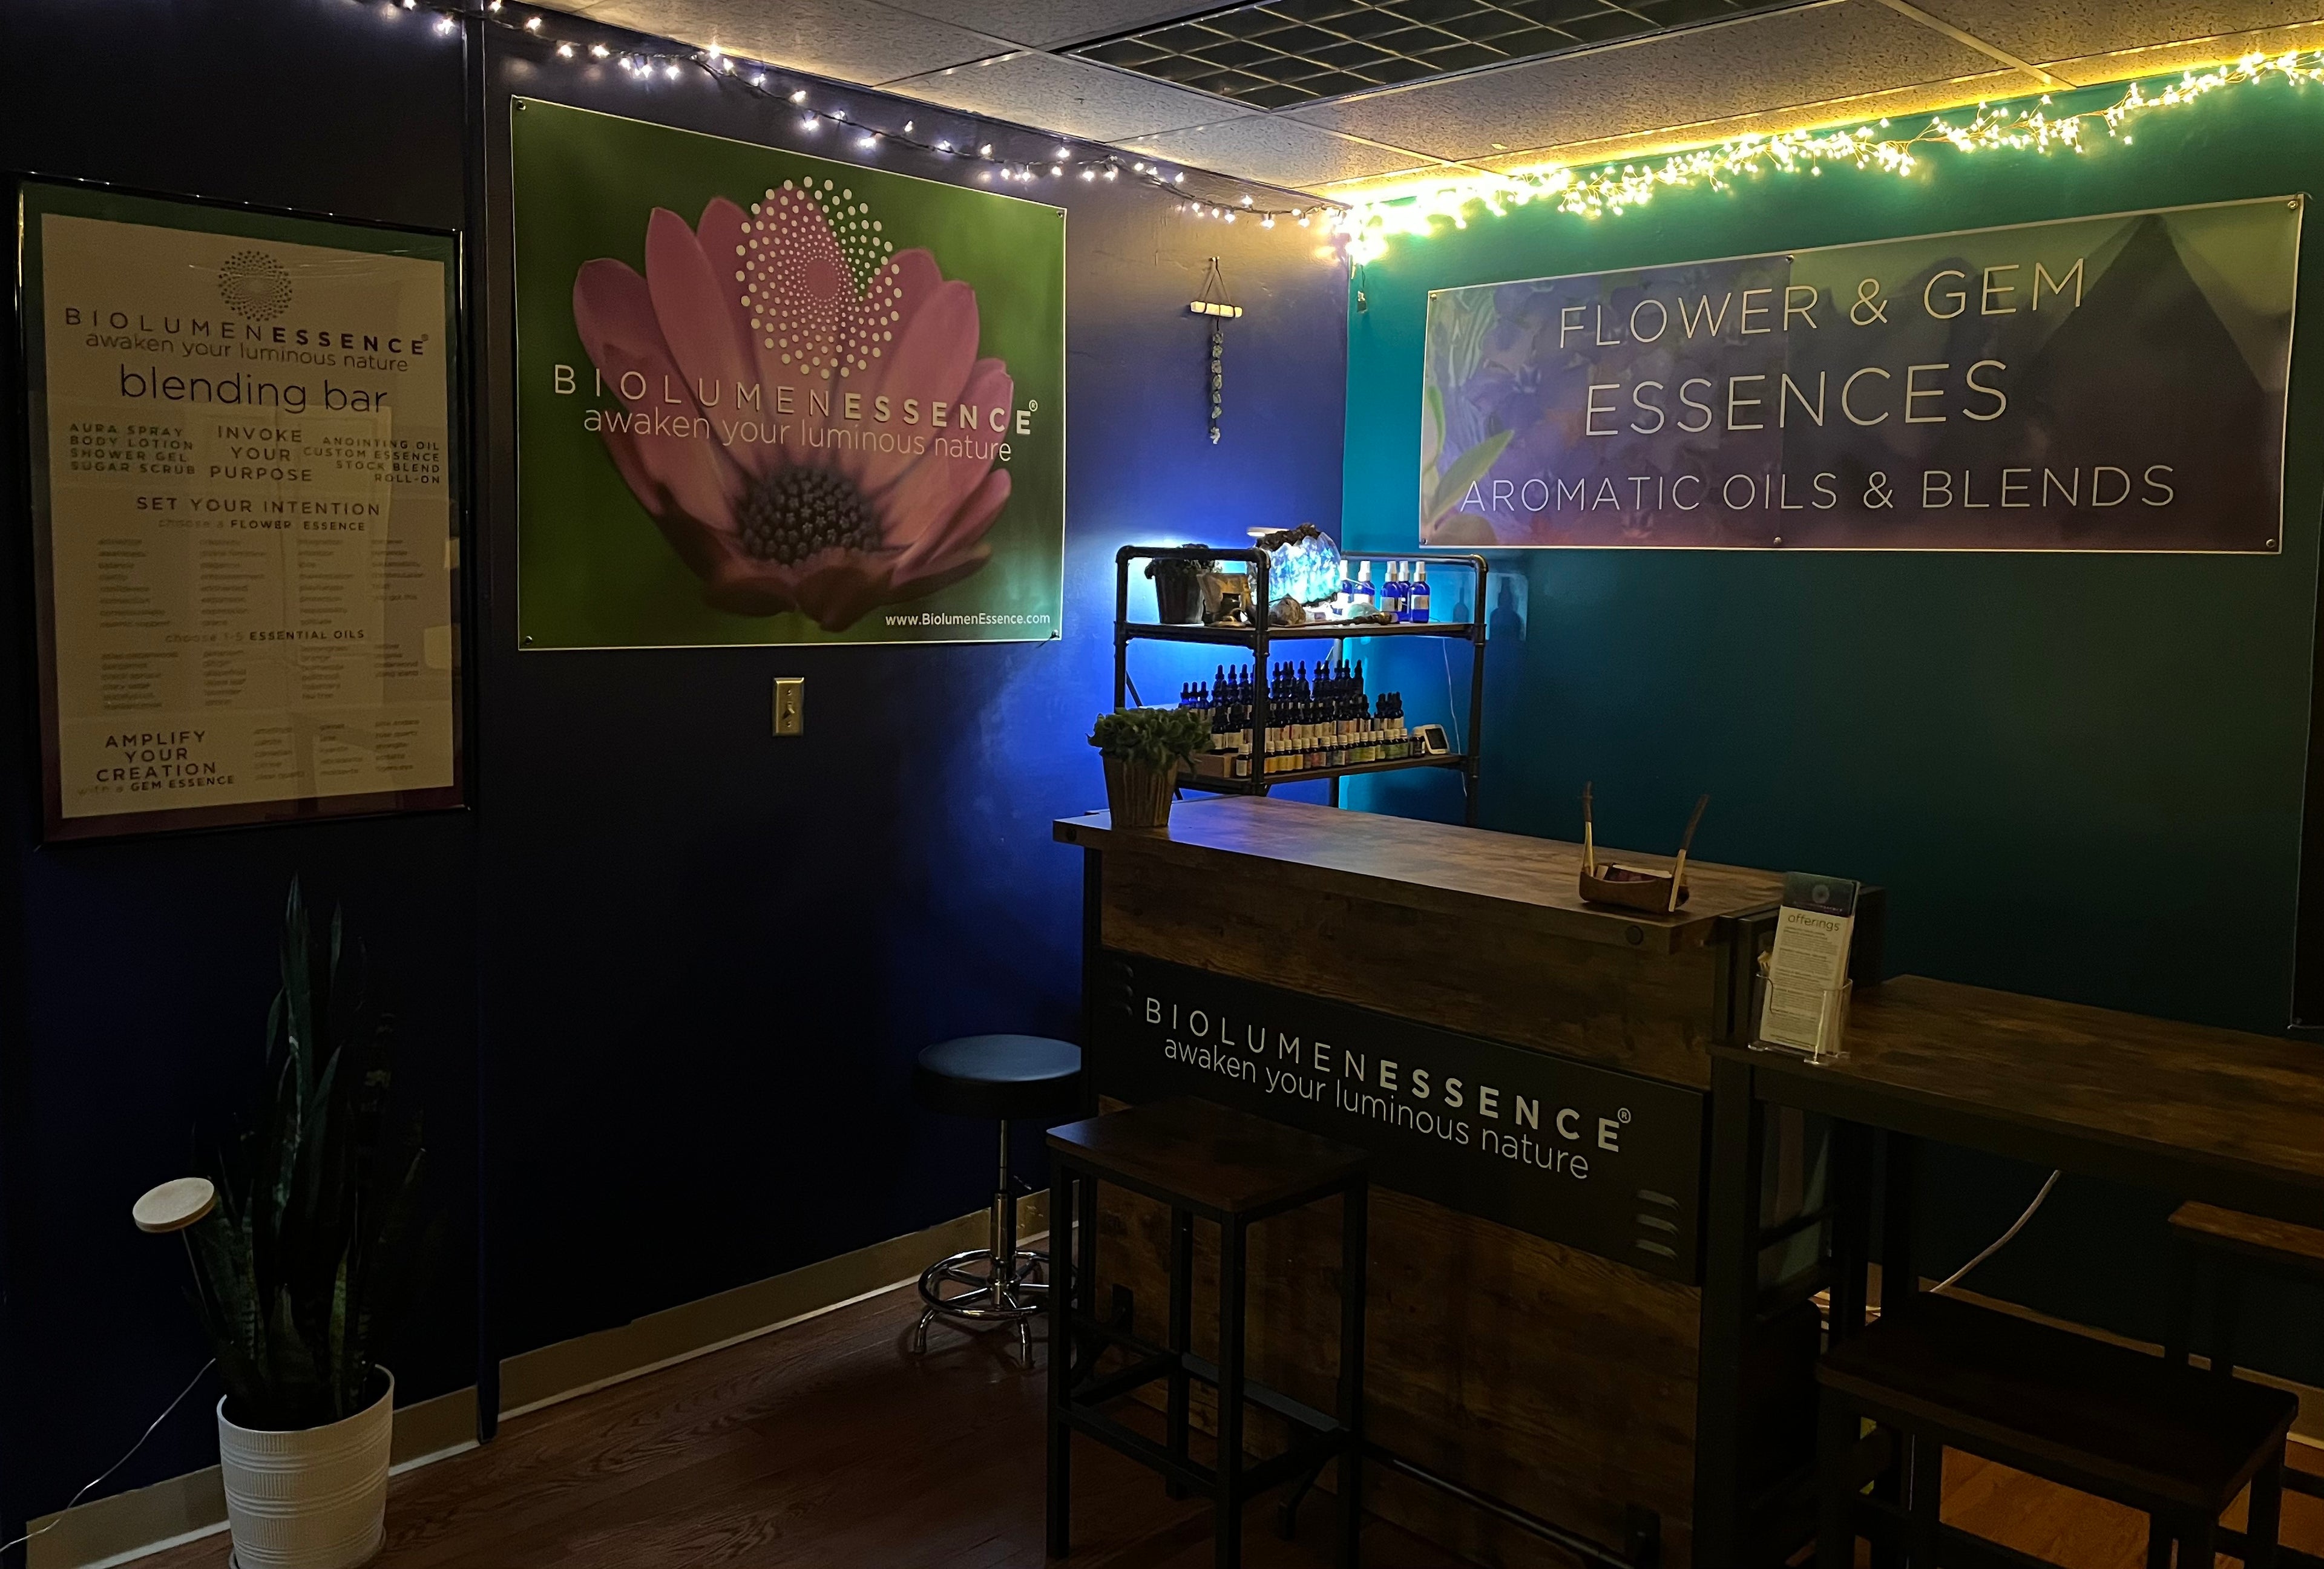 BiolumenEssence Aromatic & Botanical Blending Bar